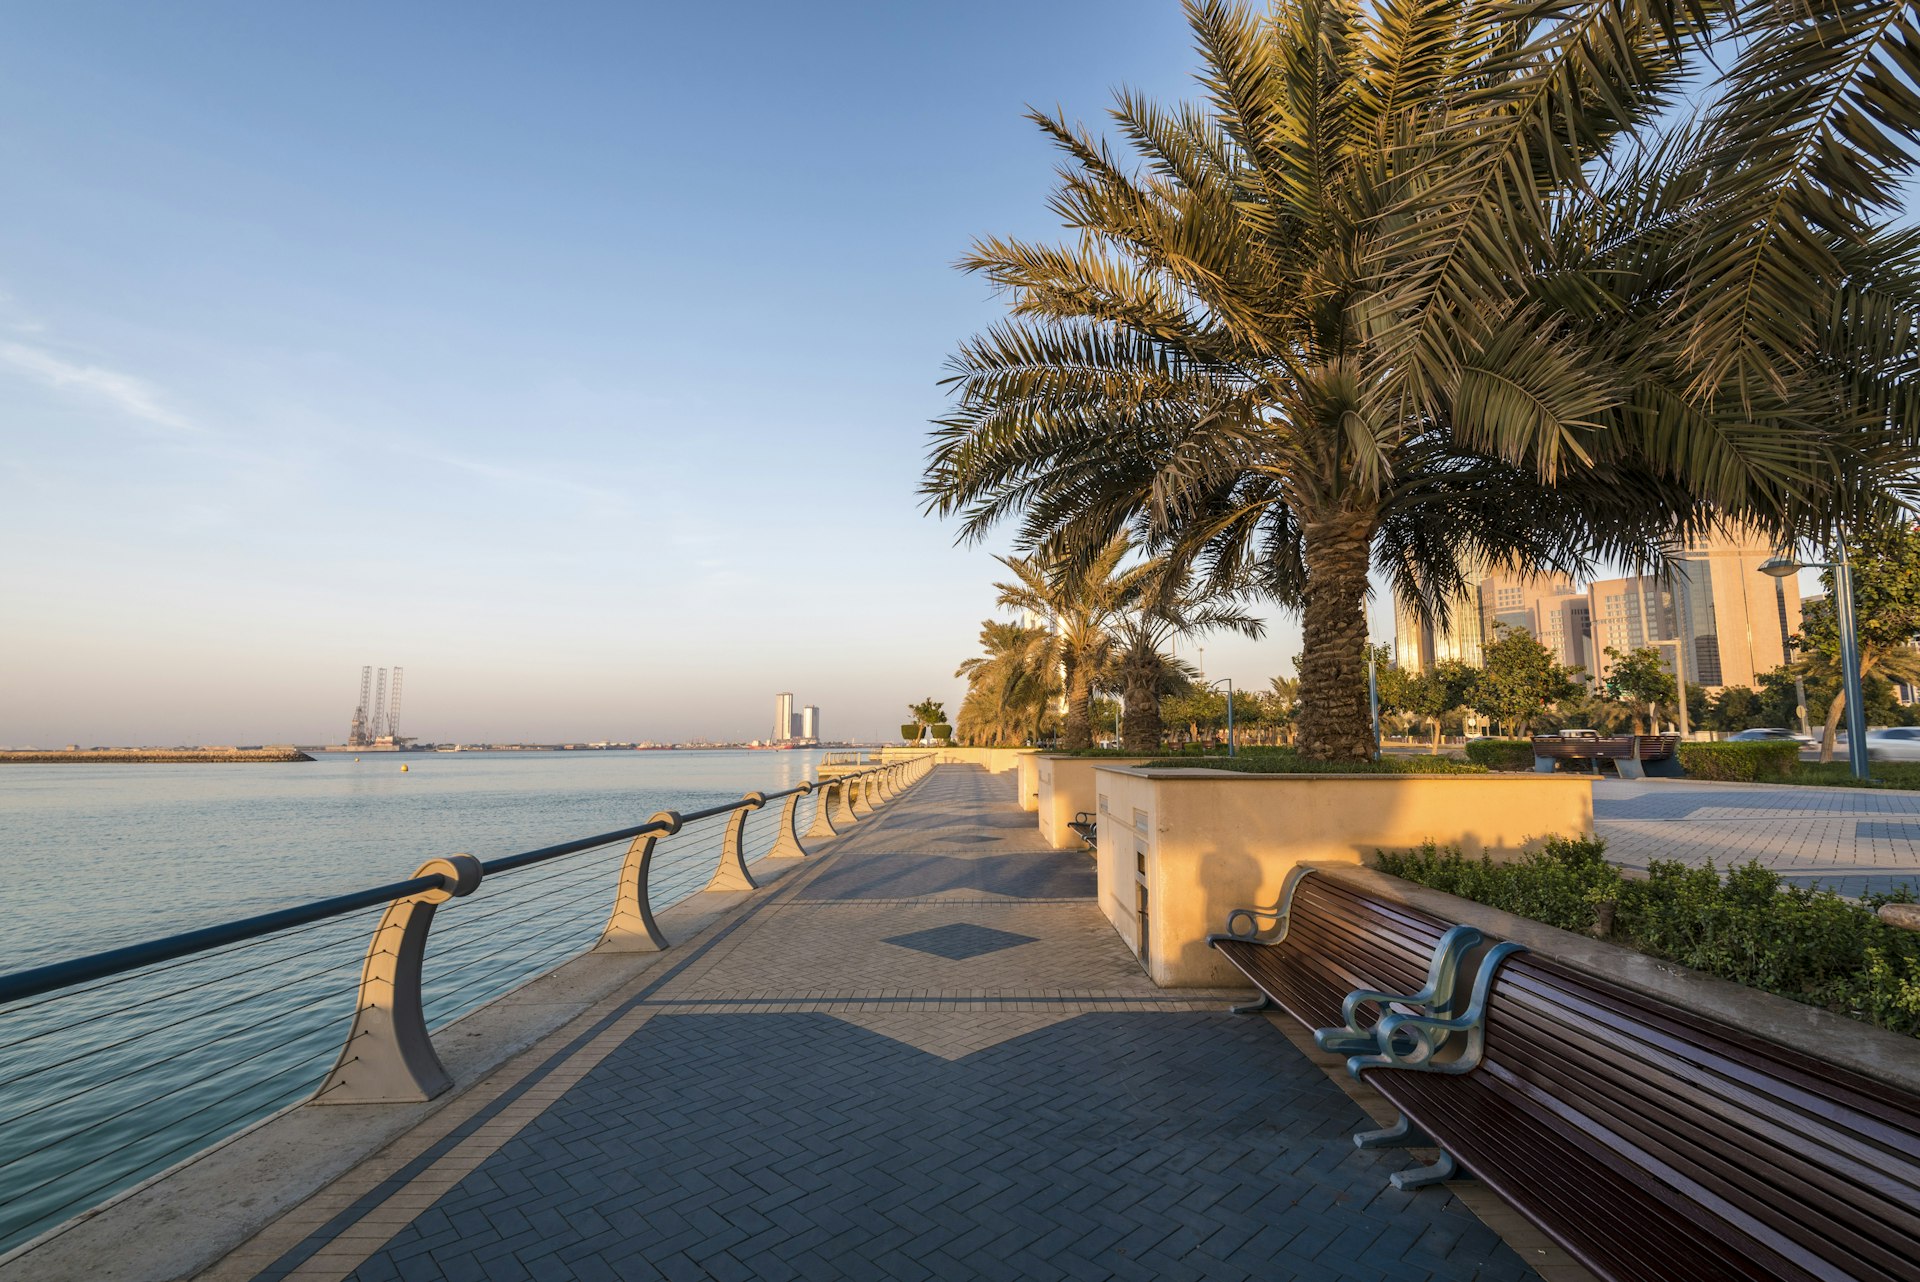 Corniche of Abu Dhabi, capital city of the United Arab Emirates